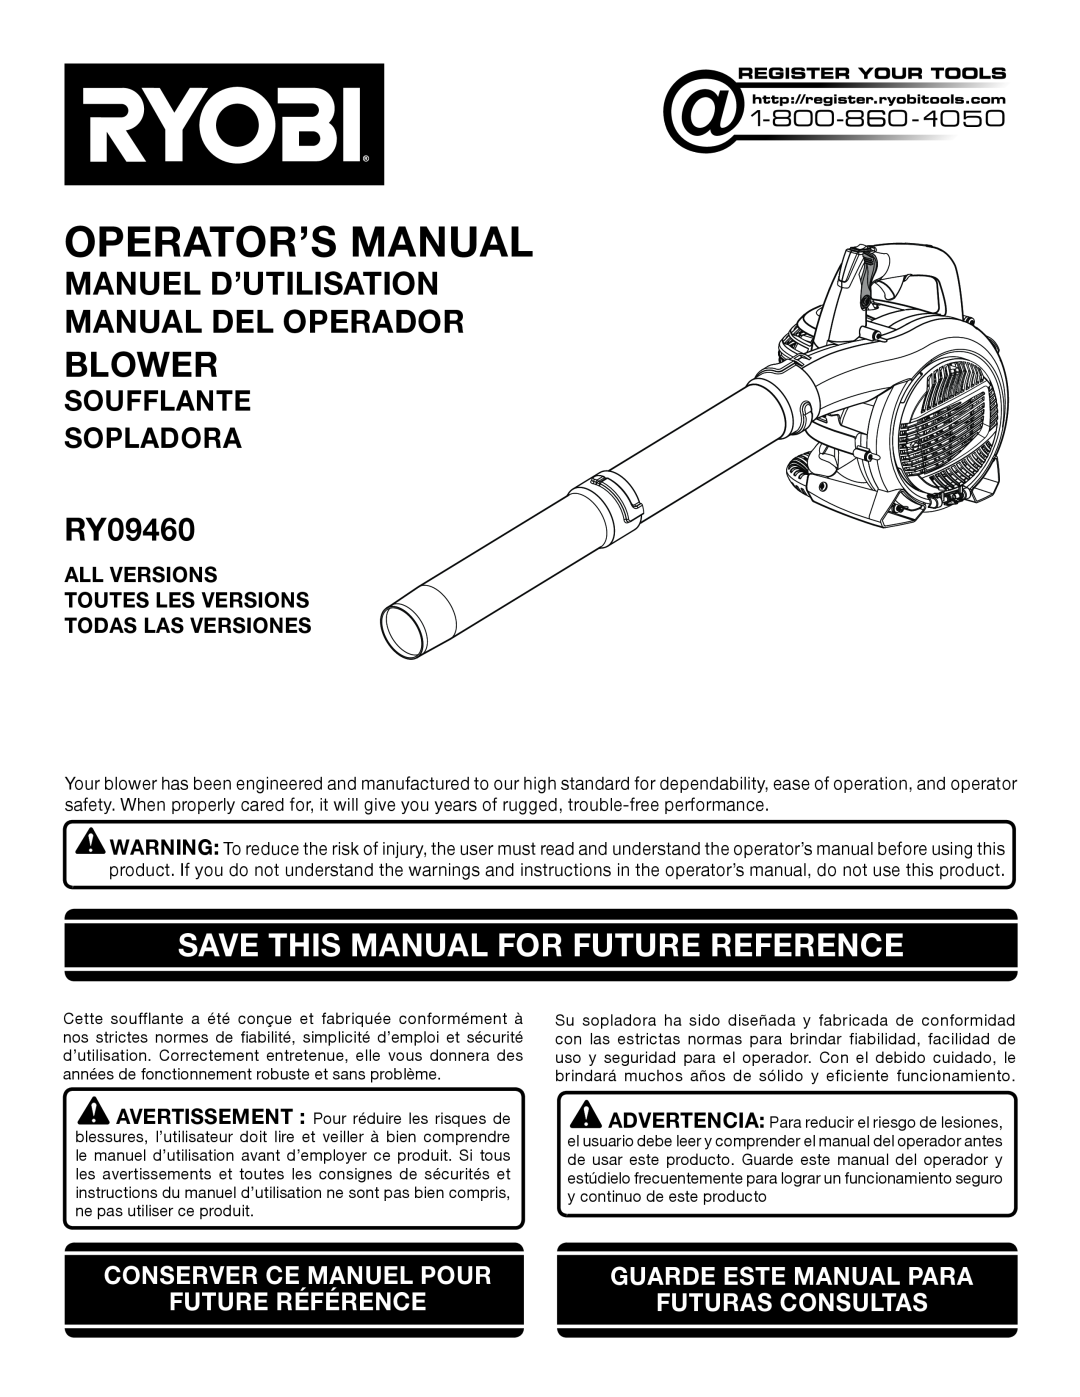 Ryobi RY09460 manuel dutilisation Blower, Manuel D’Utilisation Manual Del Operador, Save This Manual For Future Reference 